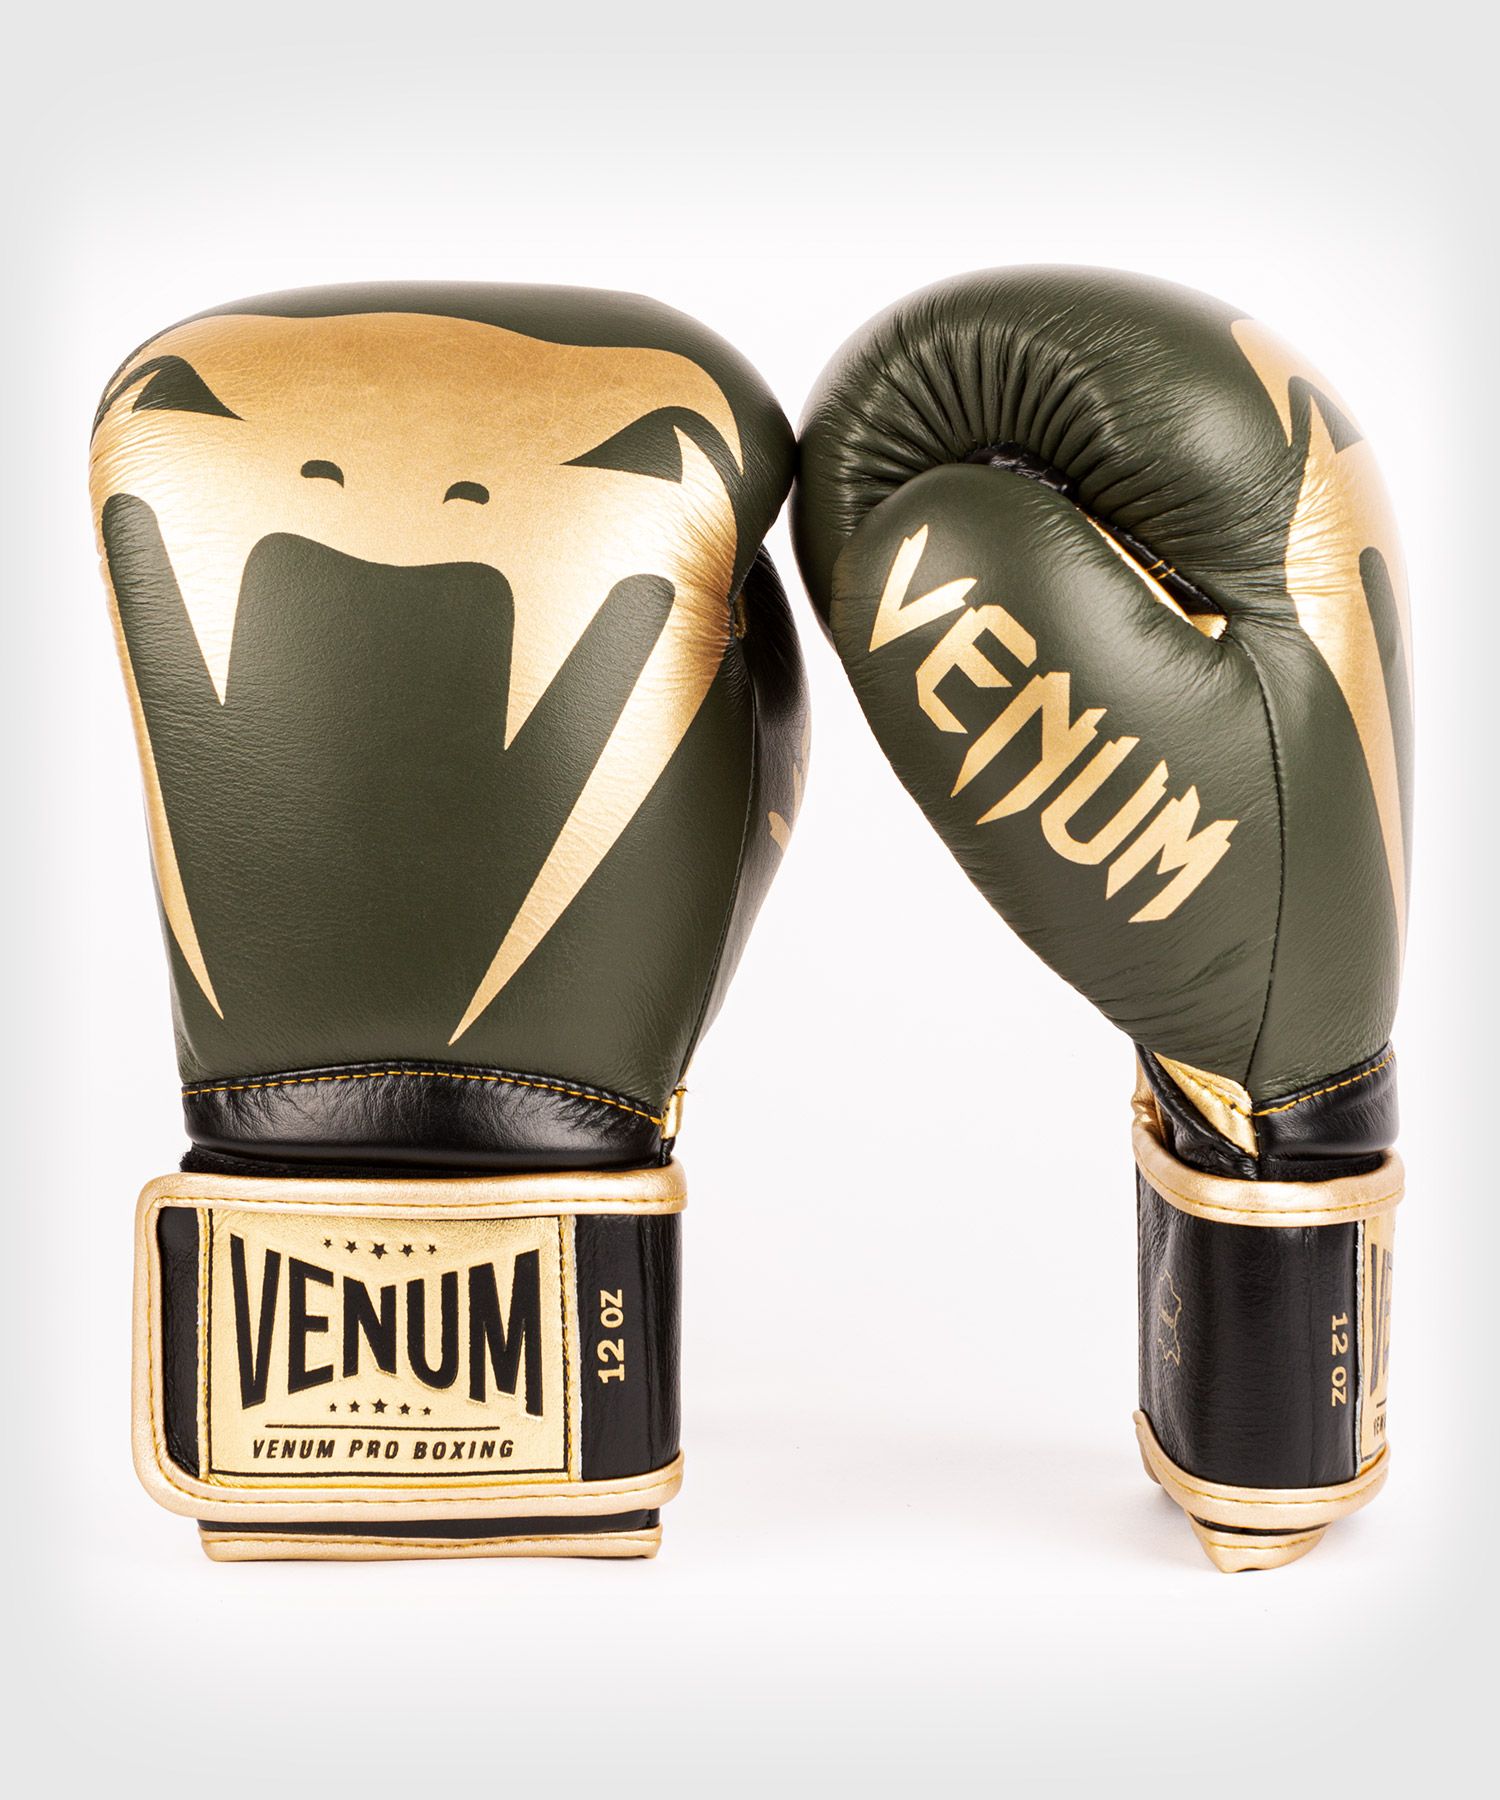 Guantes de Boxeo profesional Venum Giant 2.0  – Velcro - Caqui/Oro